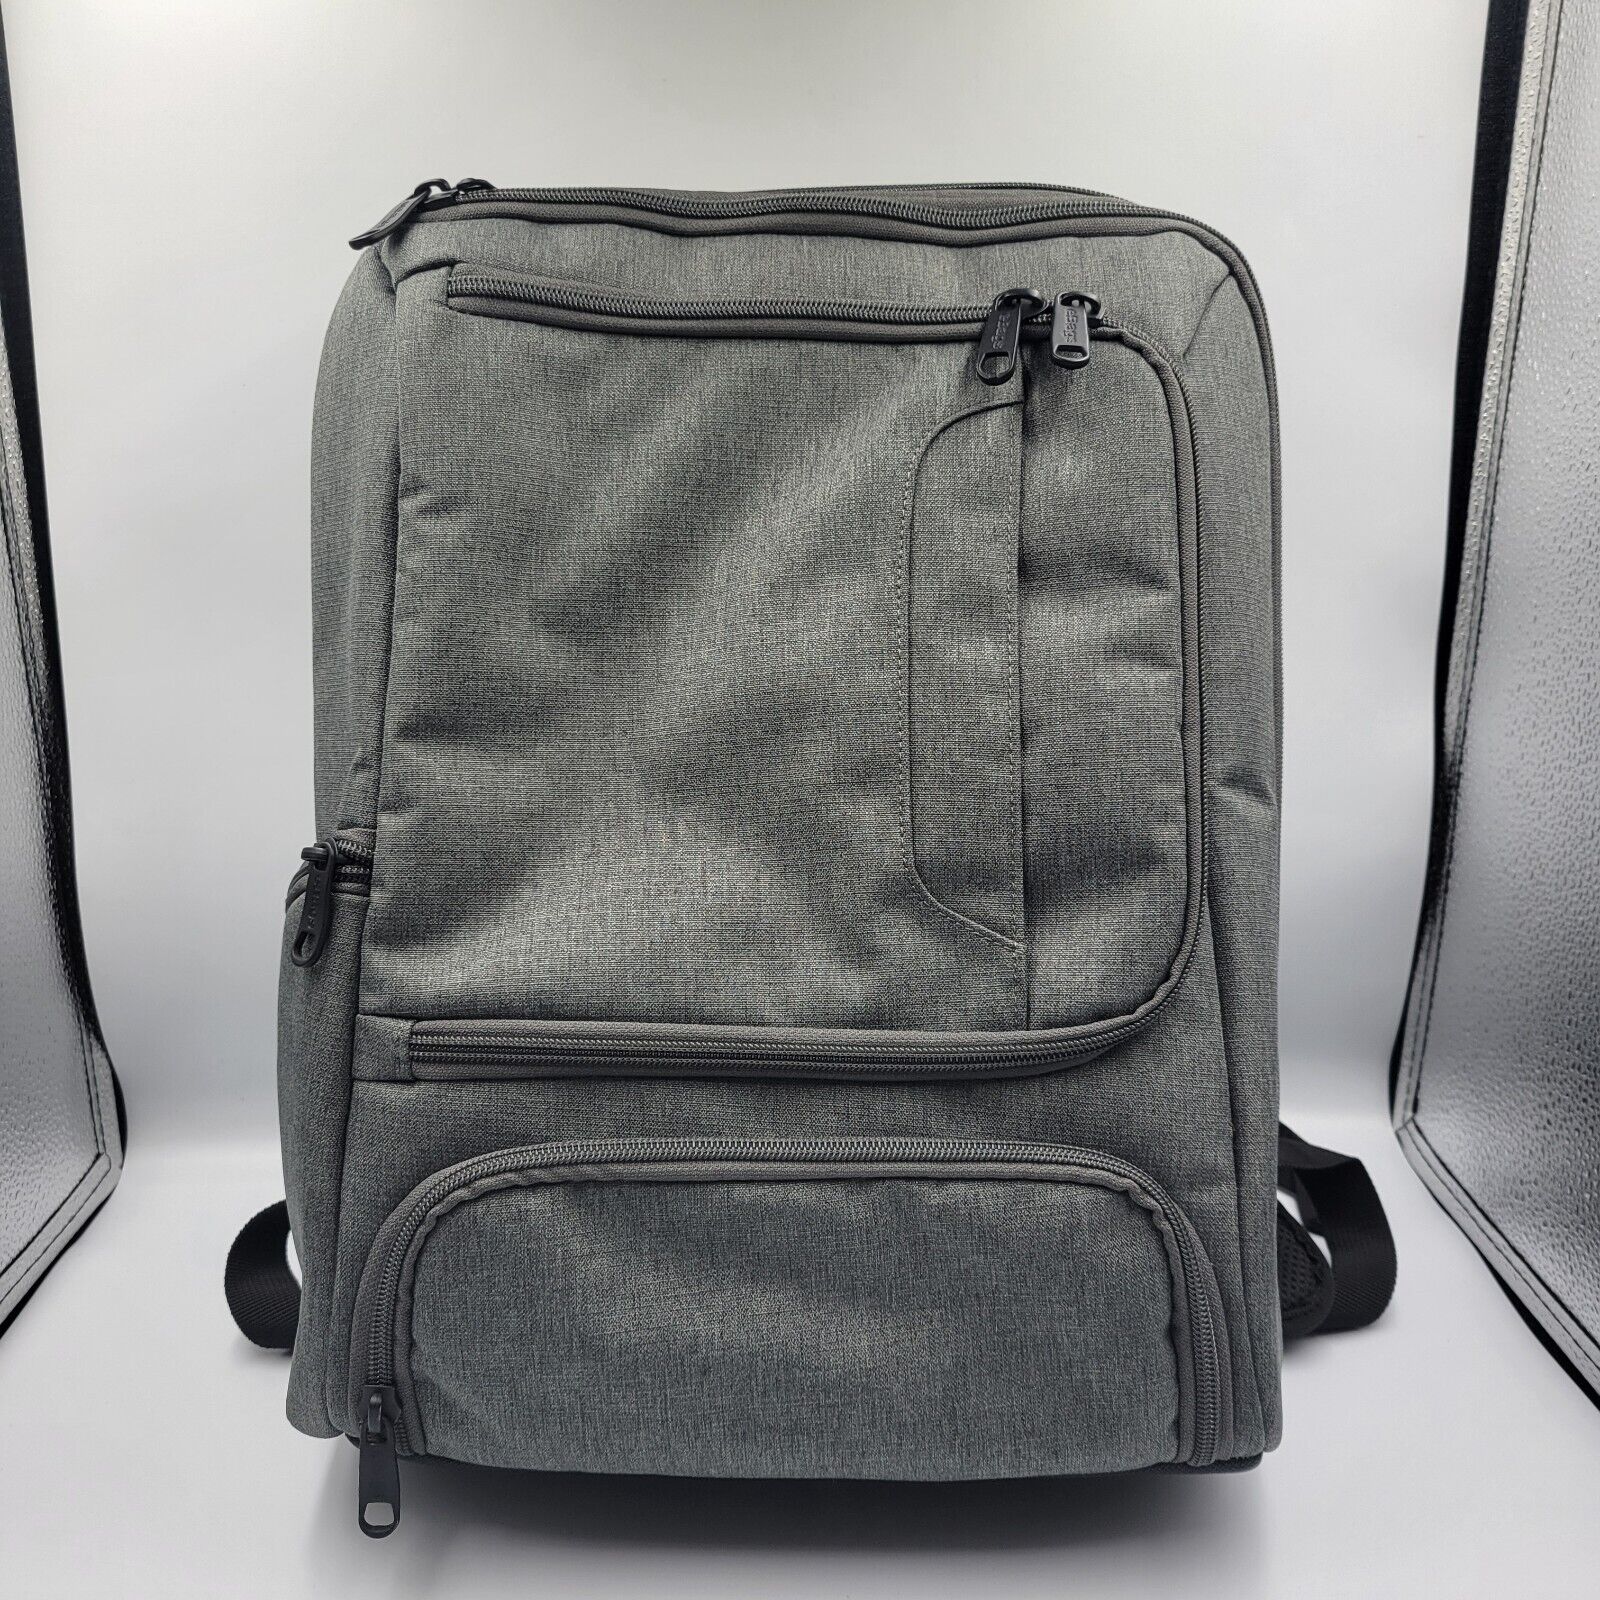 NEW Limited Edition Pro Slim Jr Laptop Backpack  Sage Green Travel Carry-On Bag